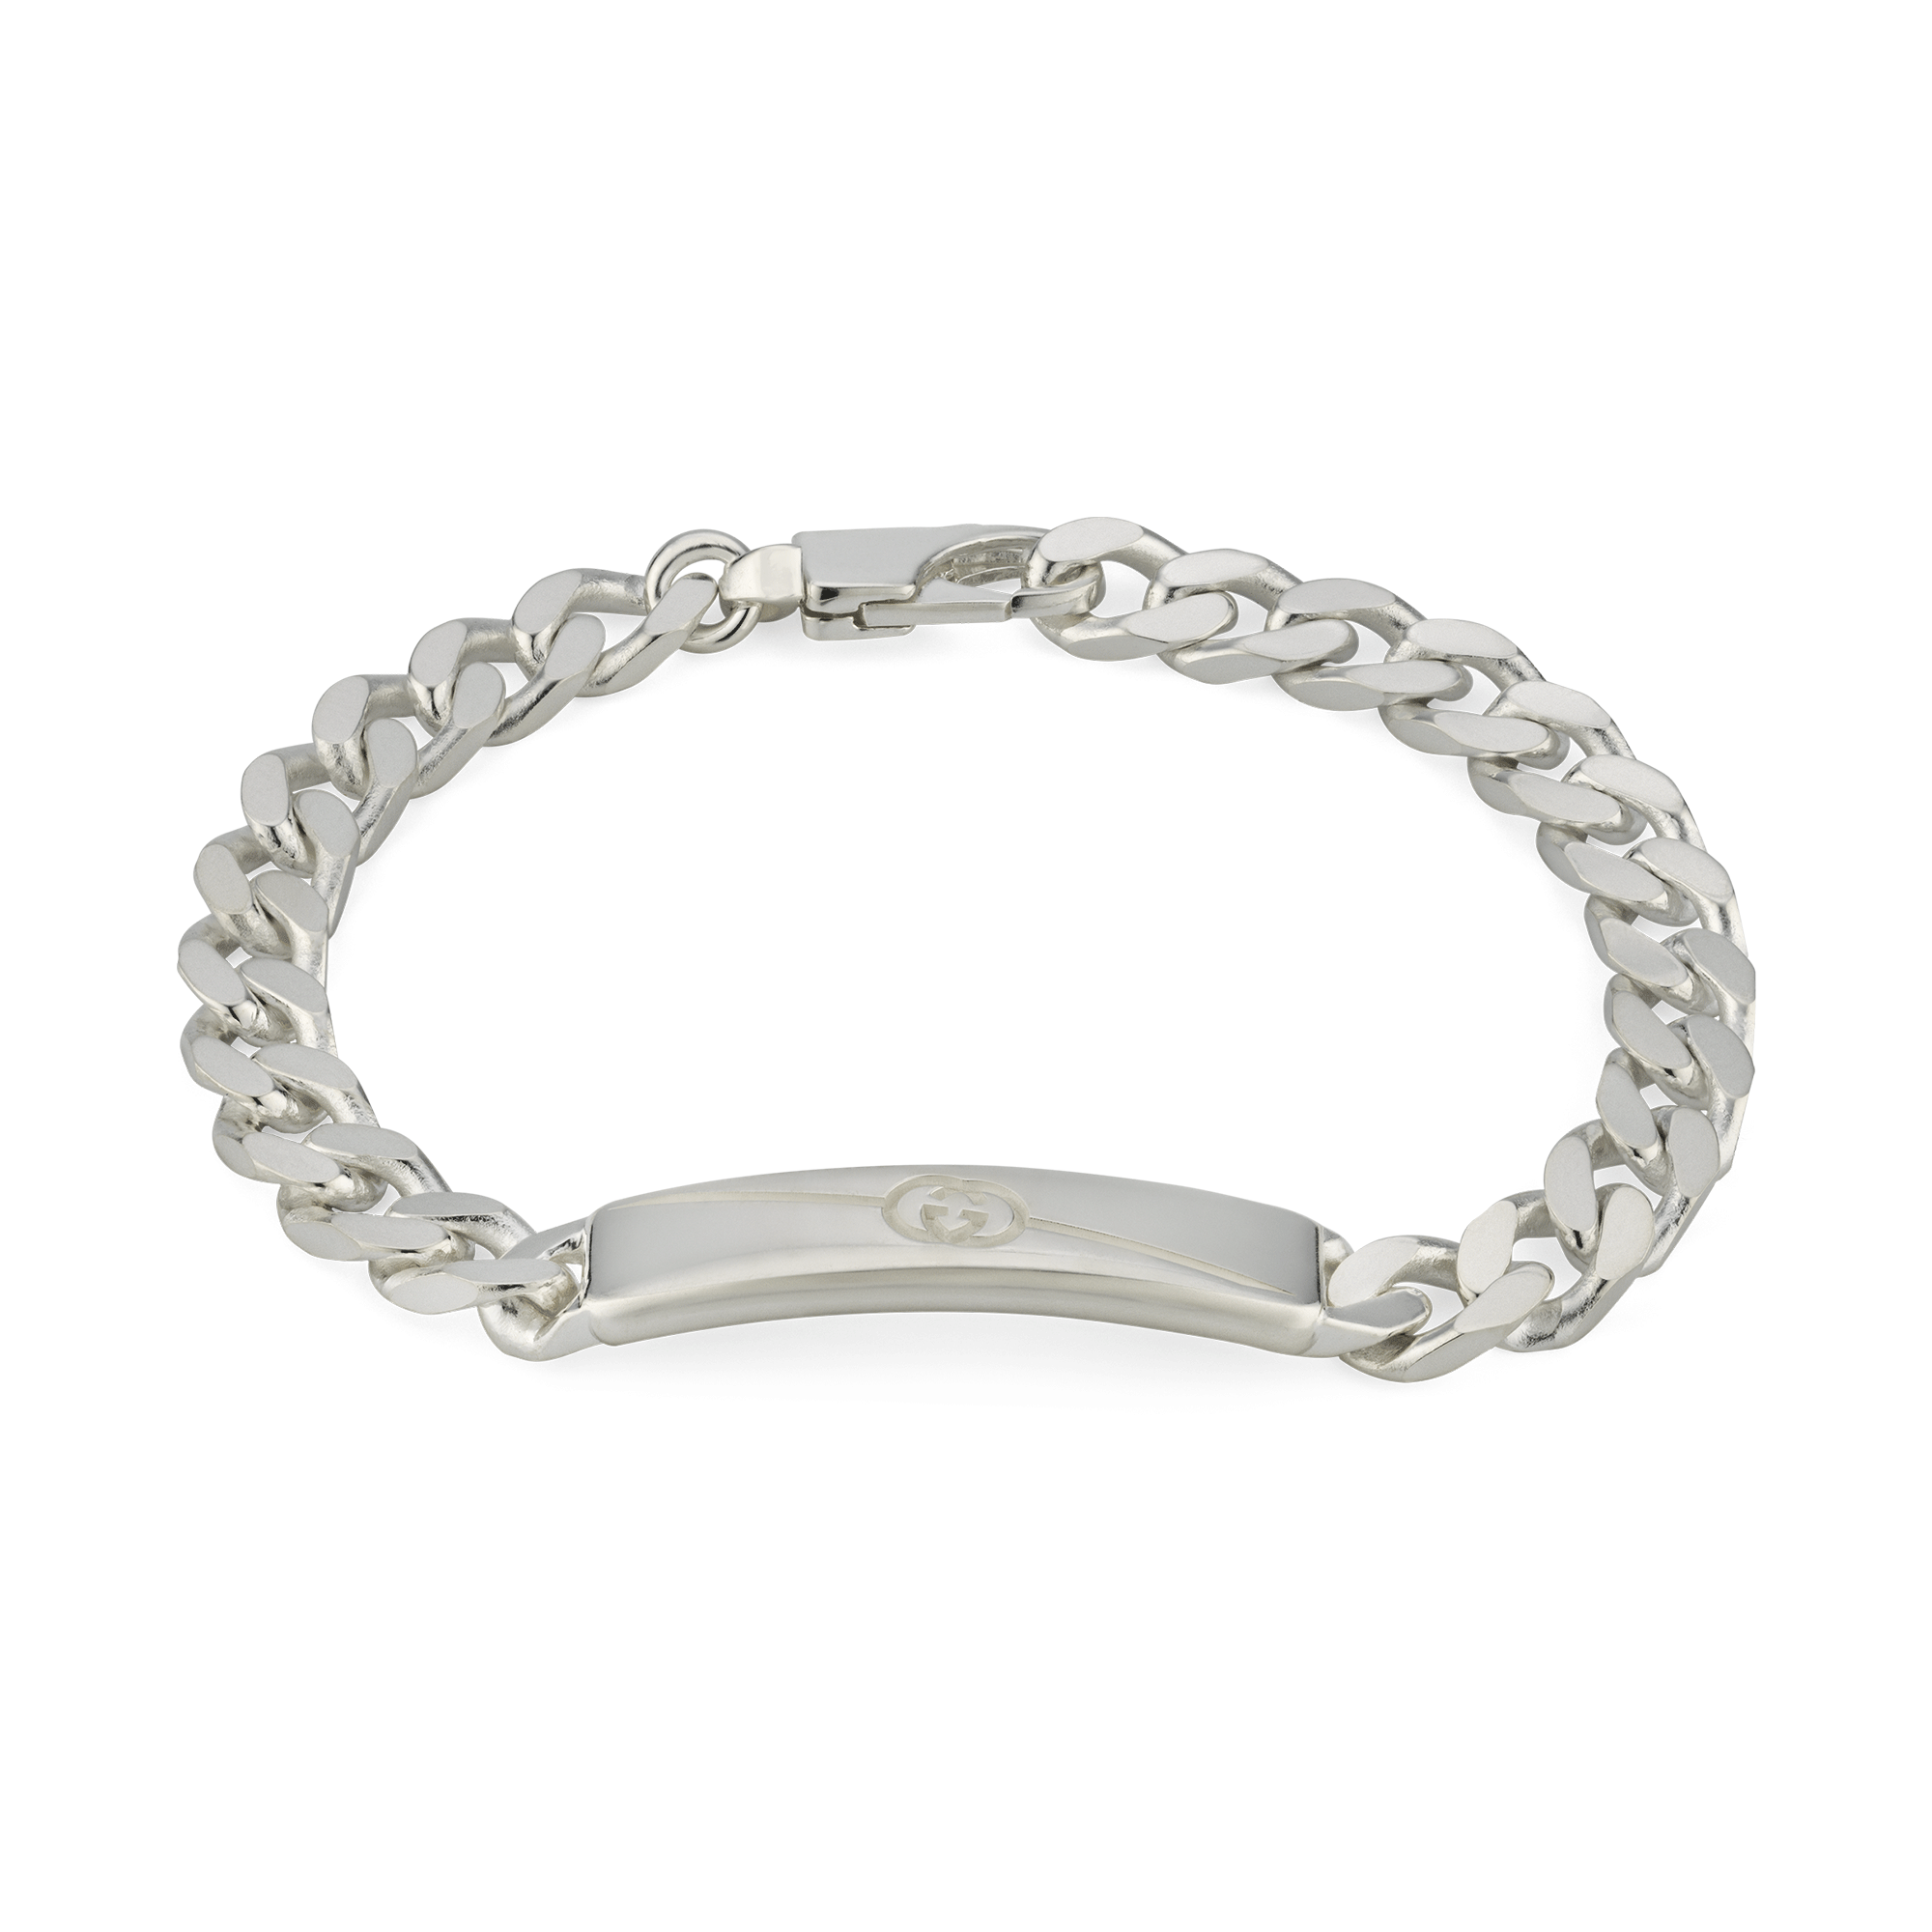 Tag Sterling Silver With Interlocking G logo Bracelet